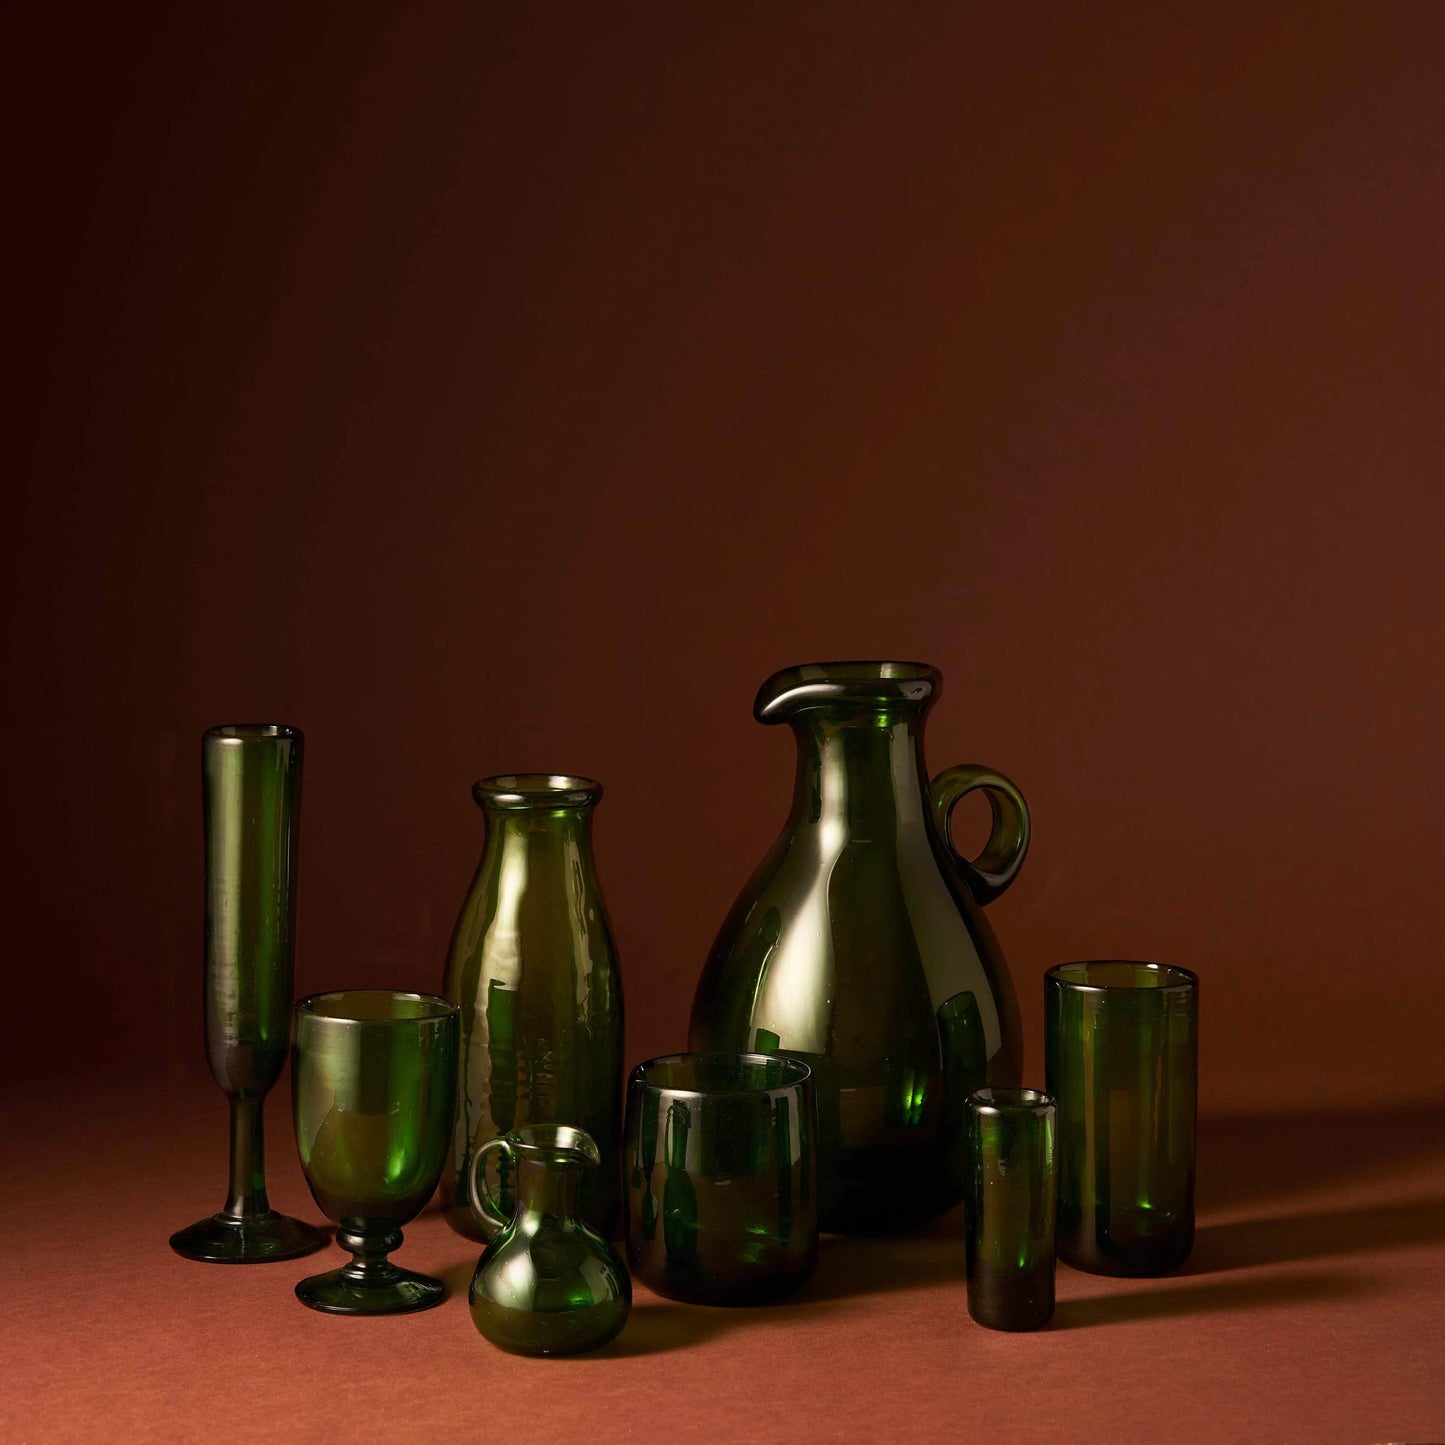 Load image into Gallery viewer, Sofia Mini Handblown Glass Jugs (Set of 2)
